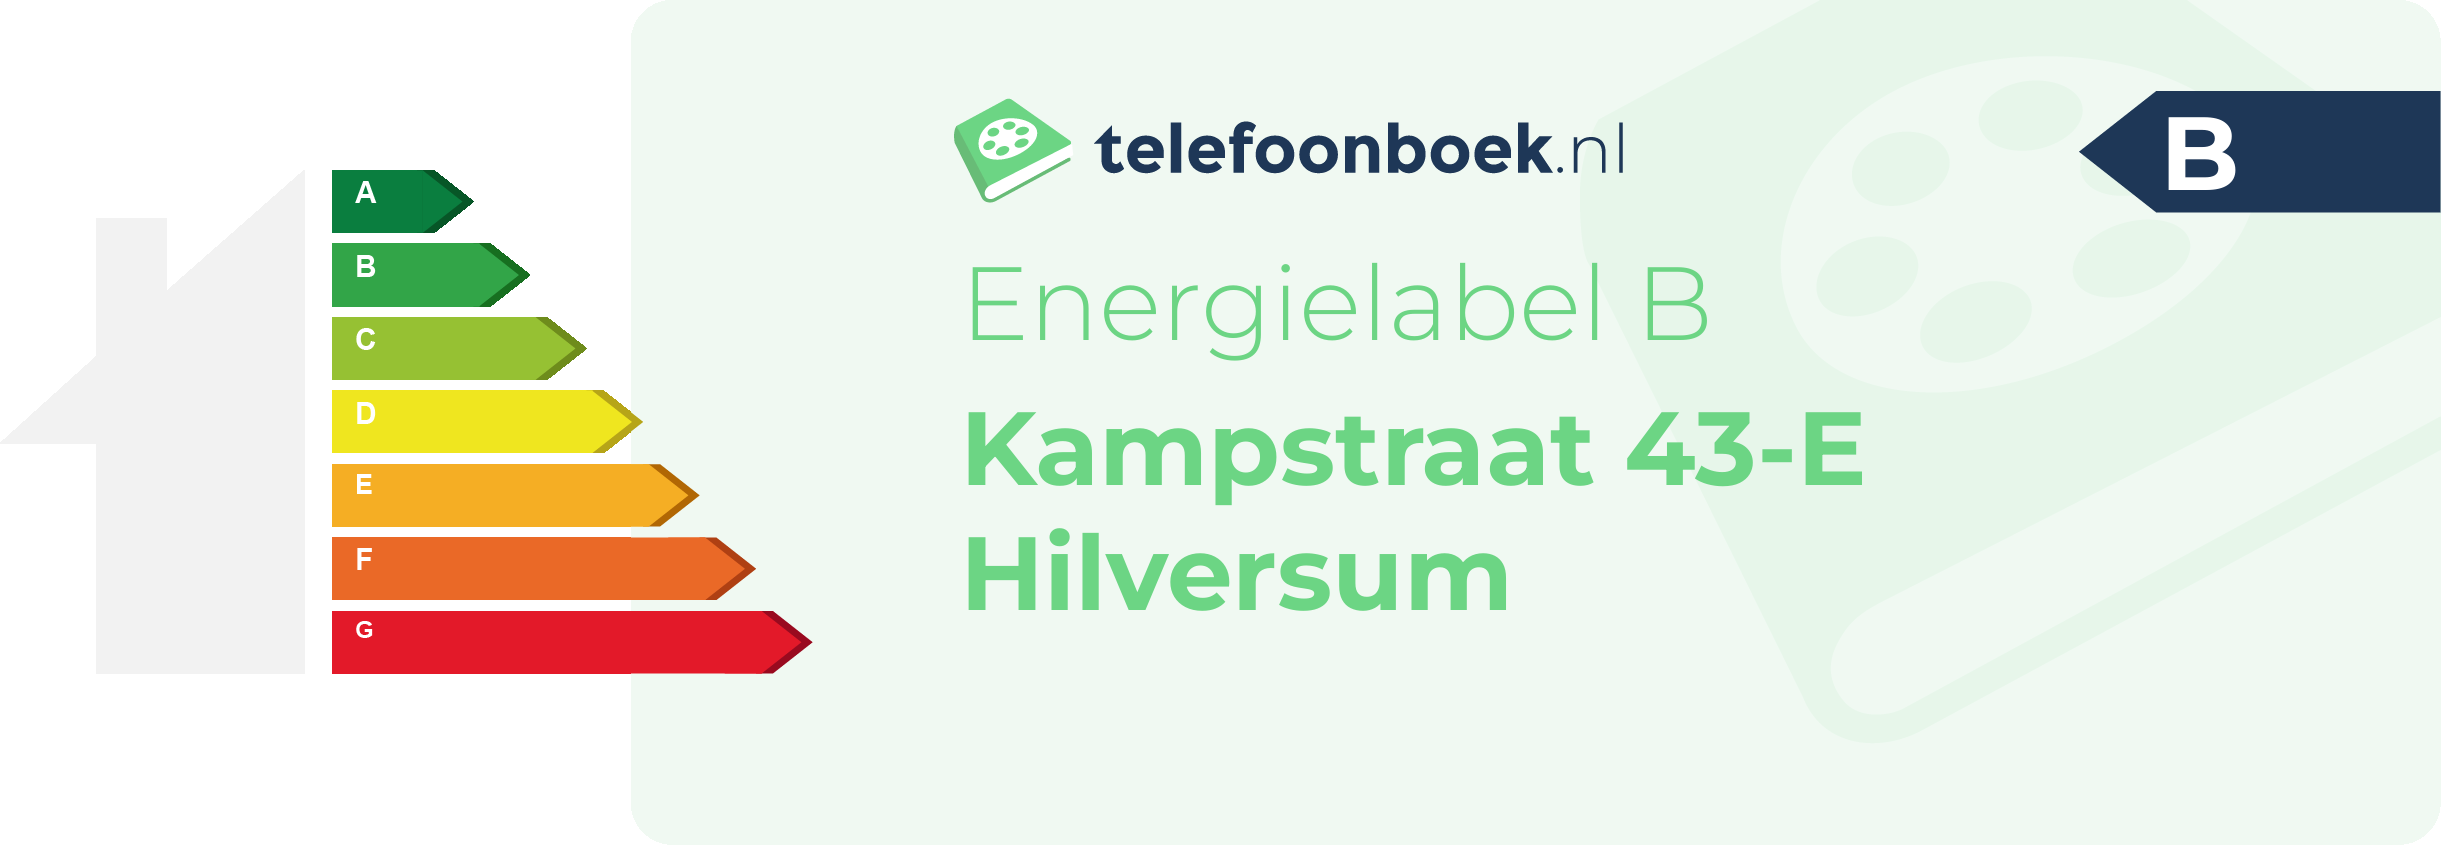 Energielabel Kampstraat 43-E Hilversum